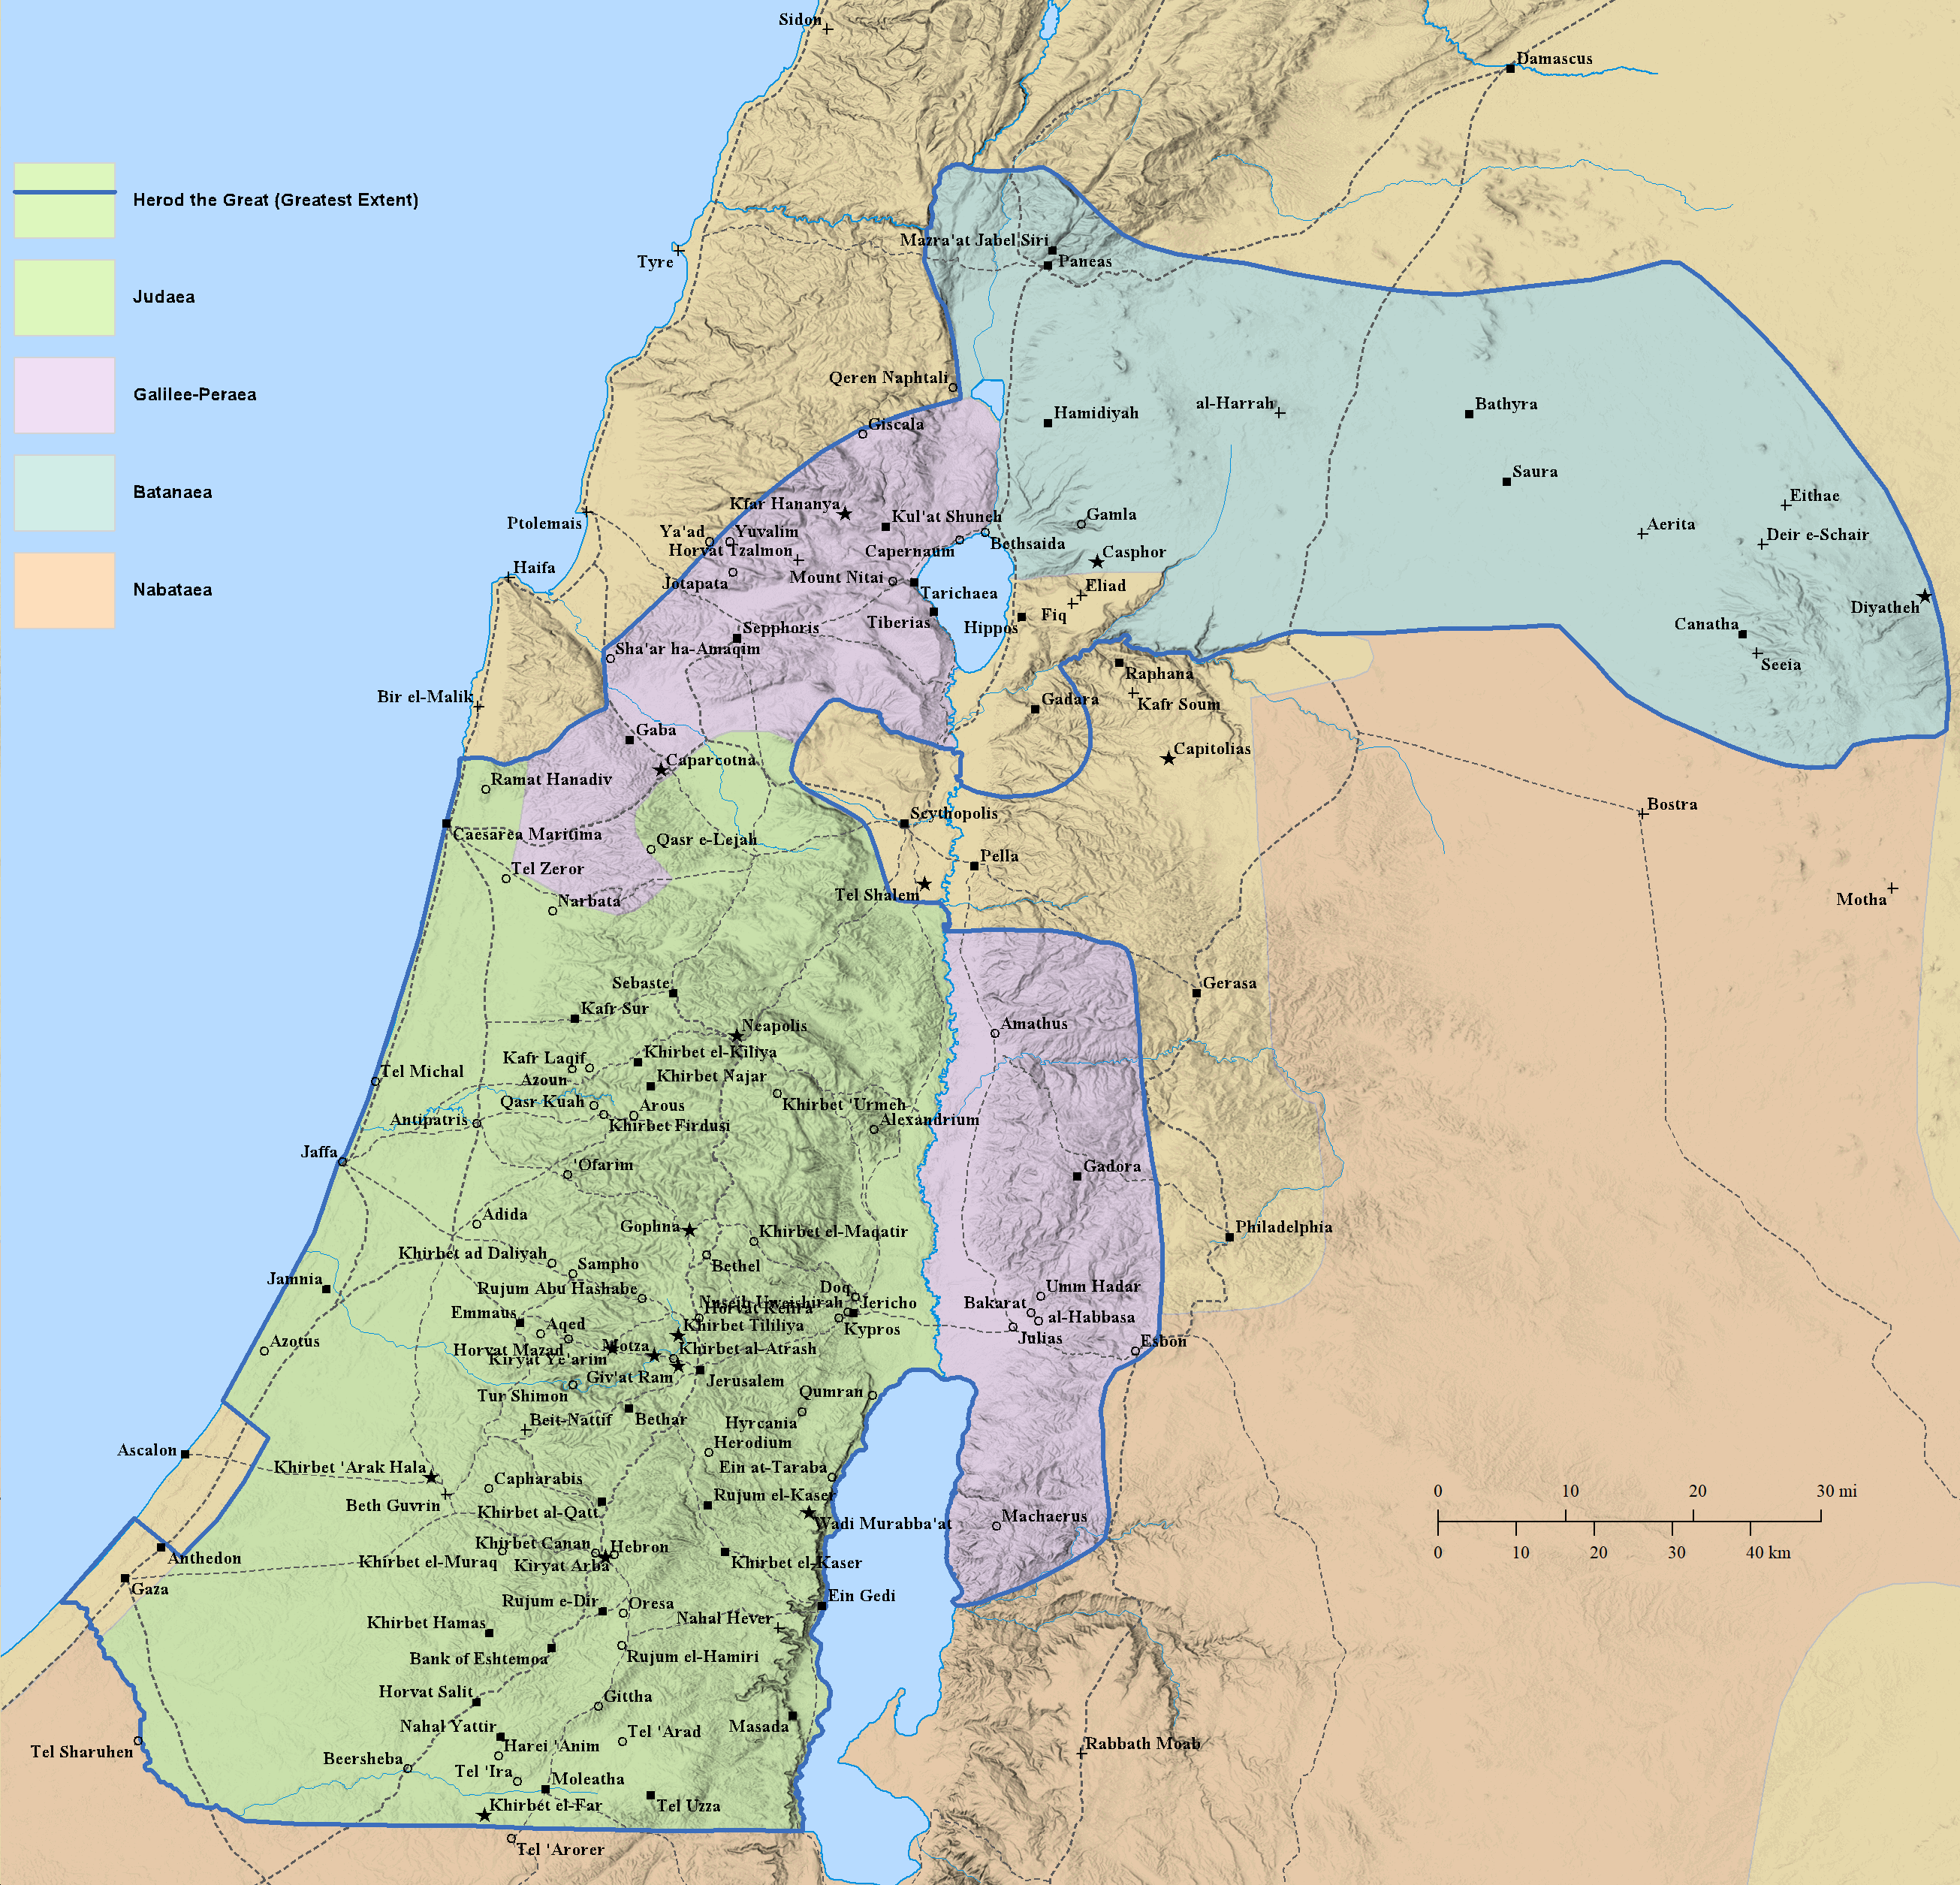 1st Century Palestine Map